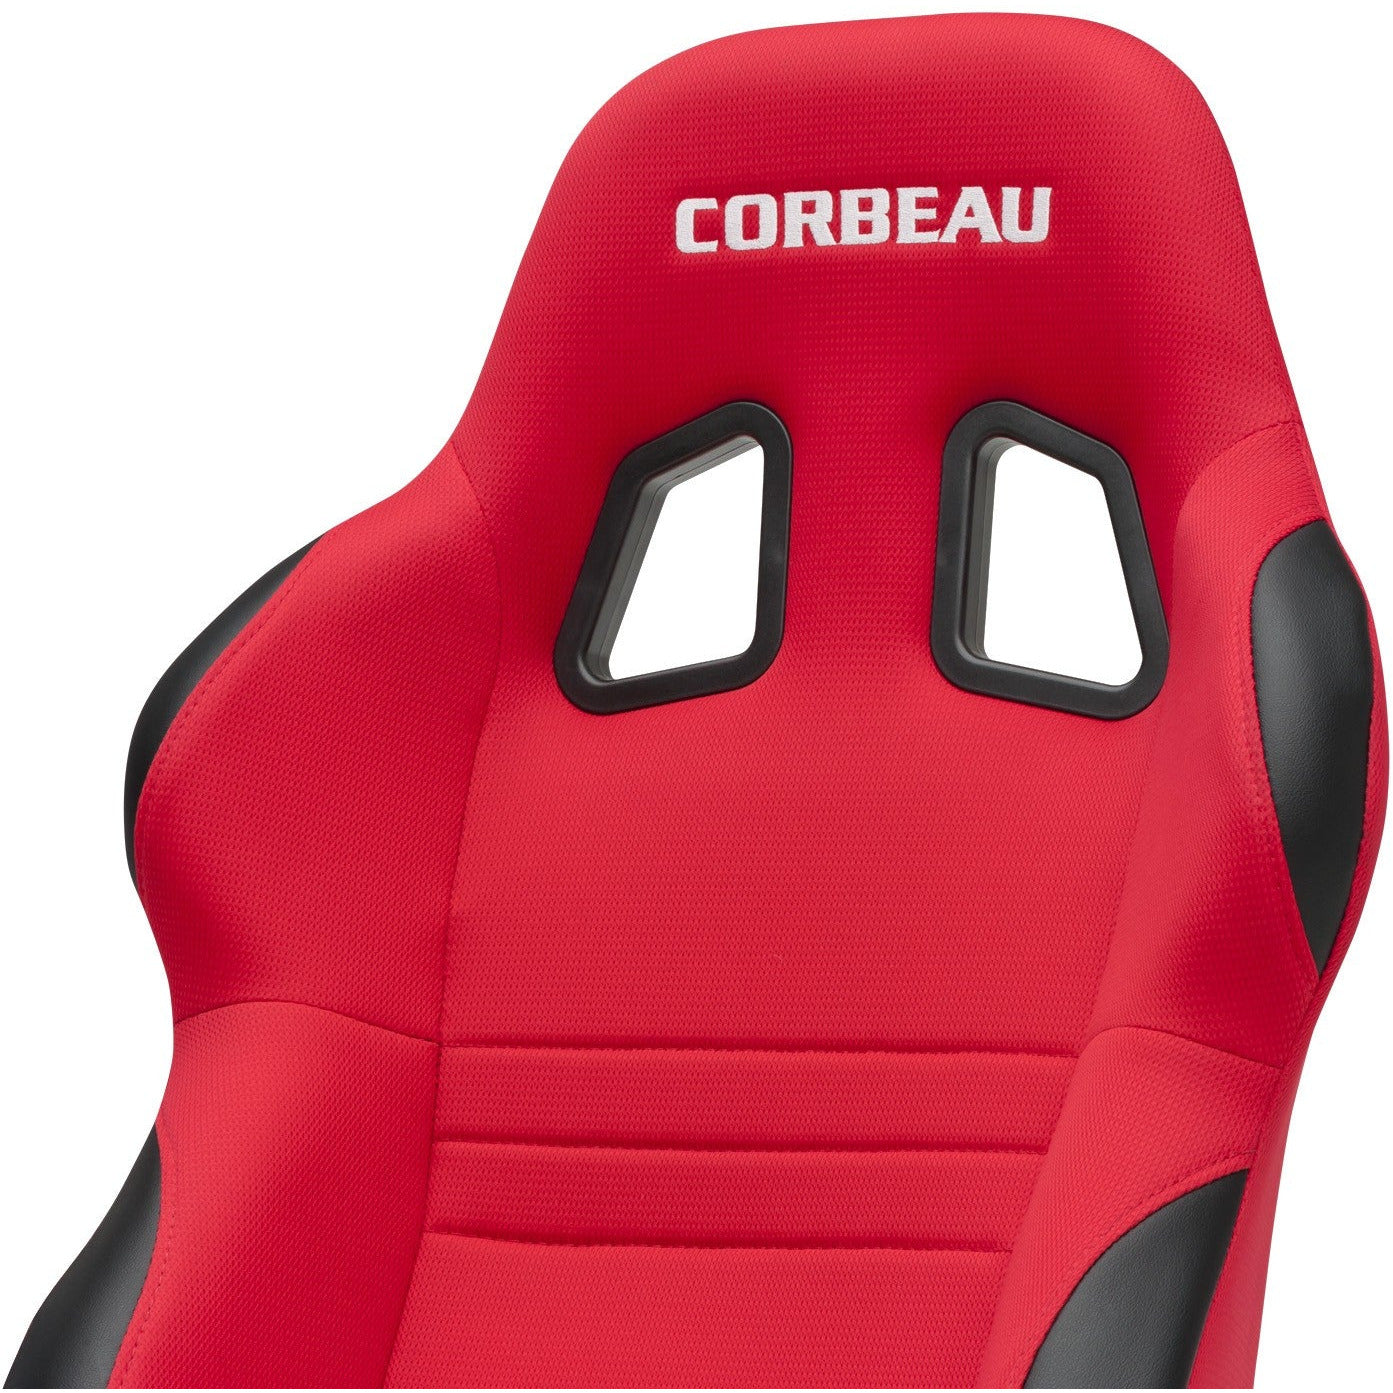 Corbeau A4 Black Leather Seats - UNIVERSAL (Pair) 